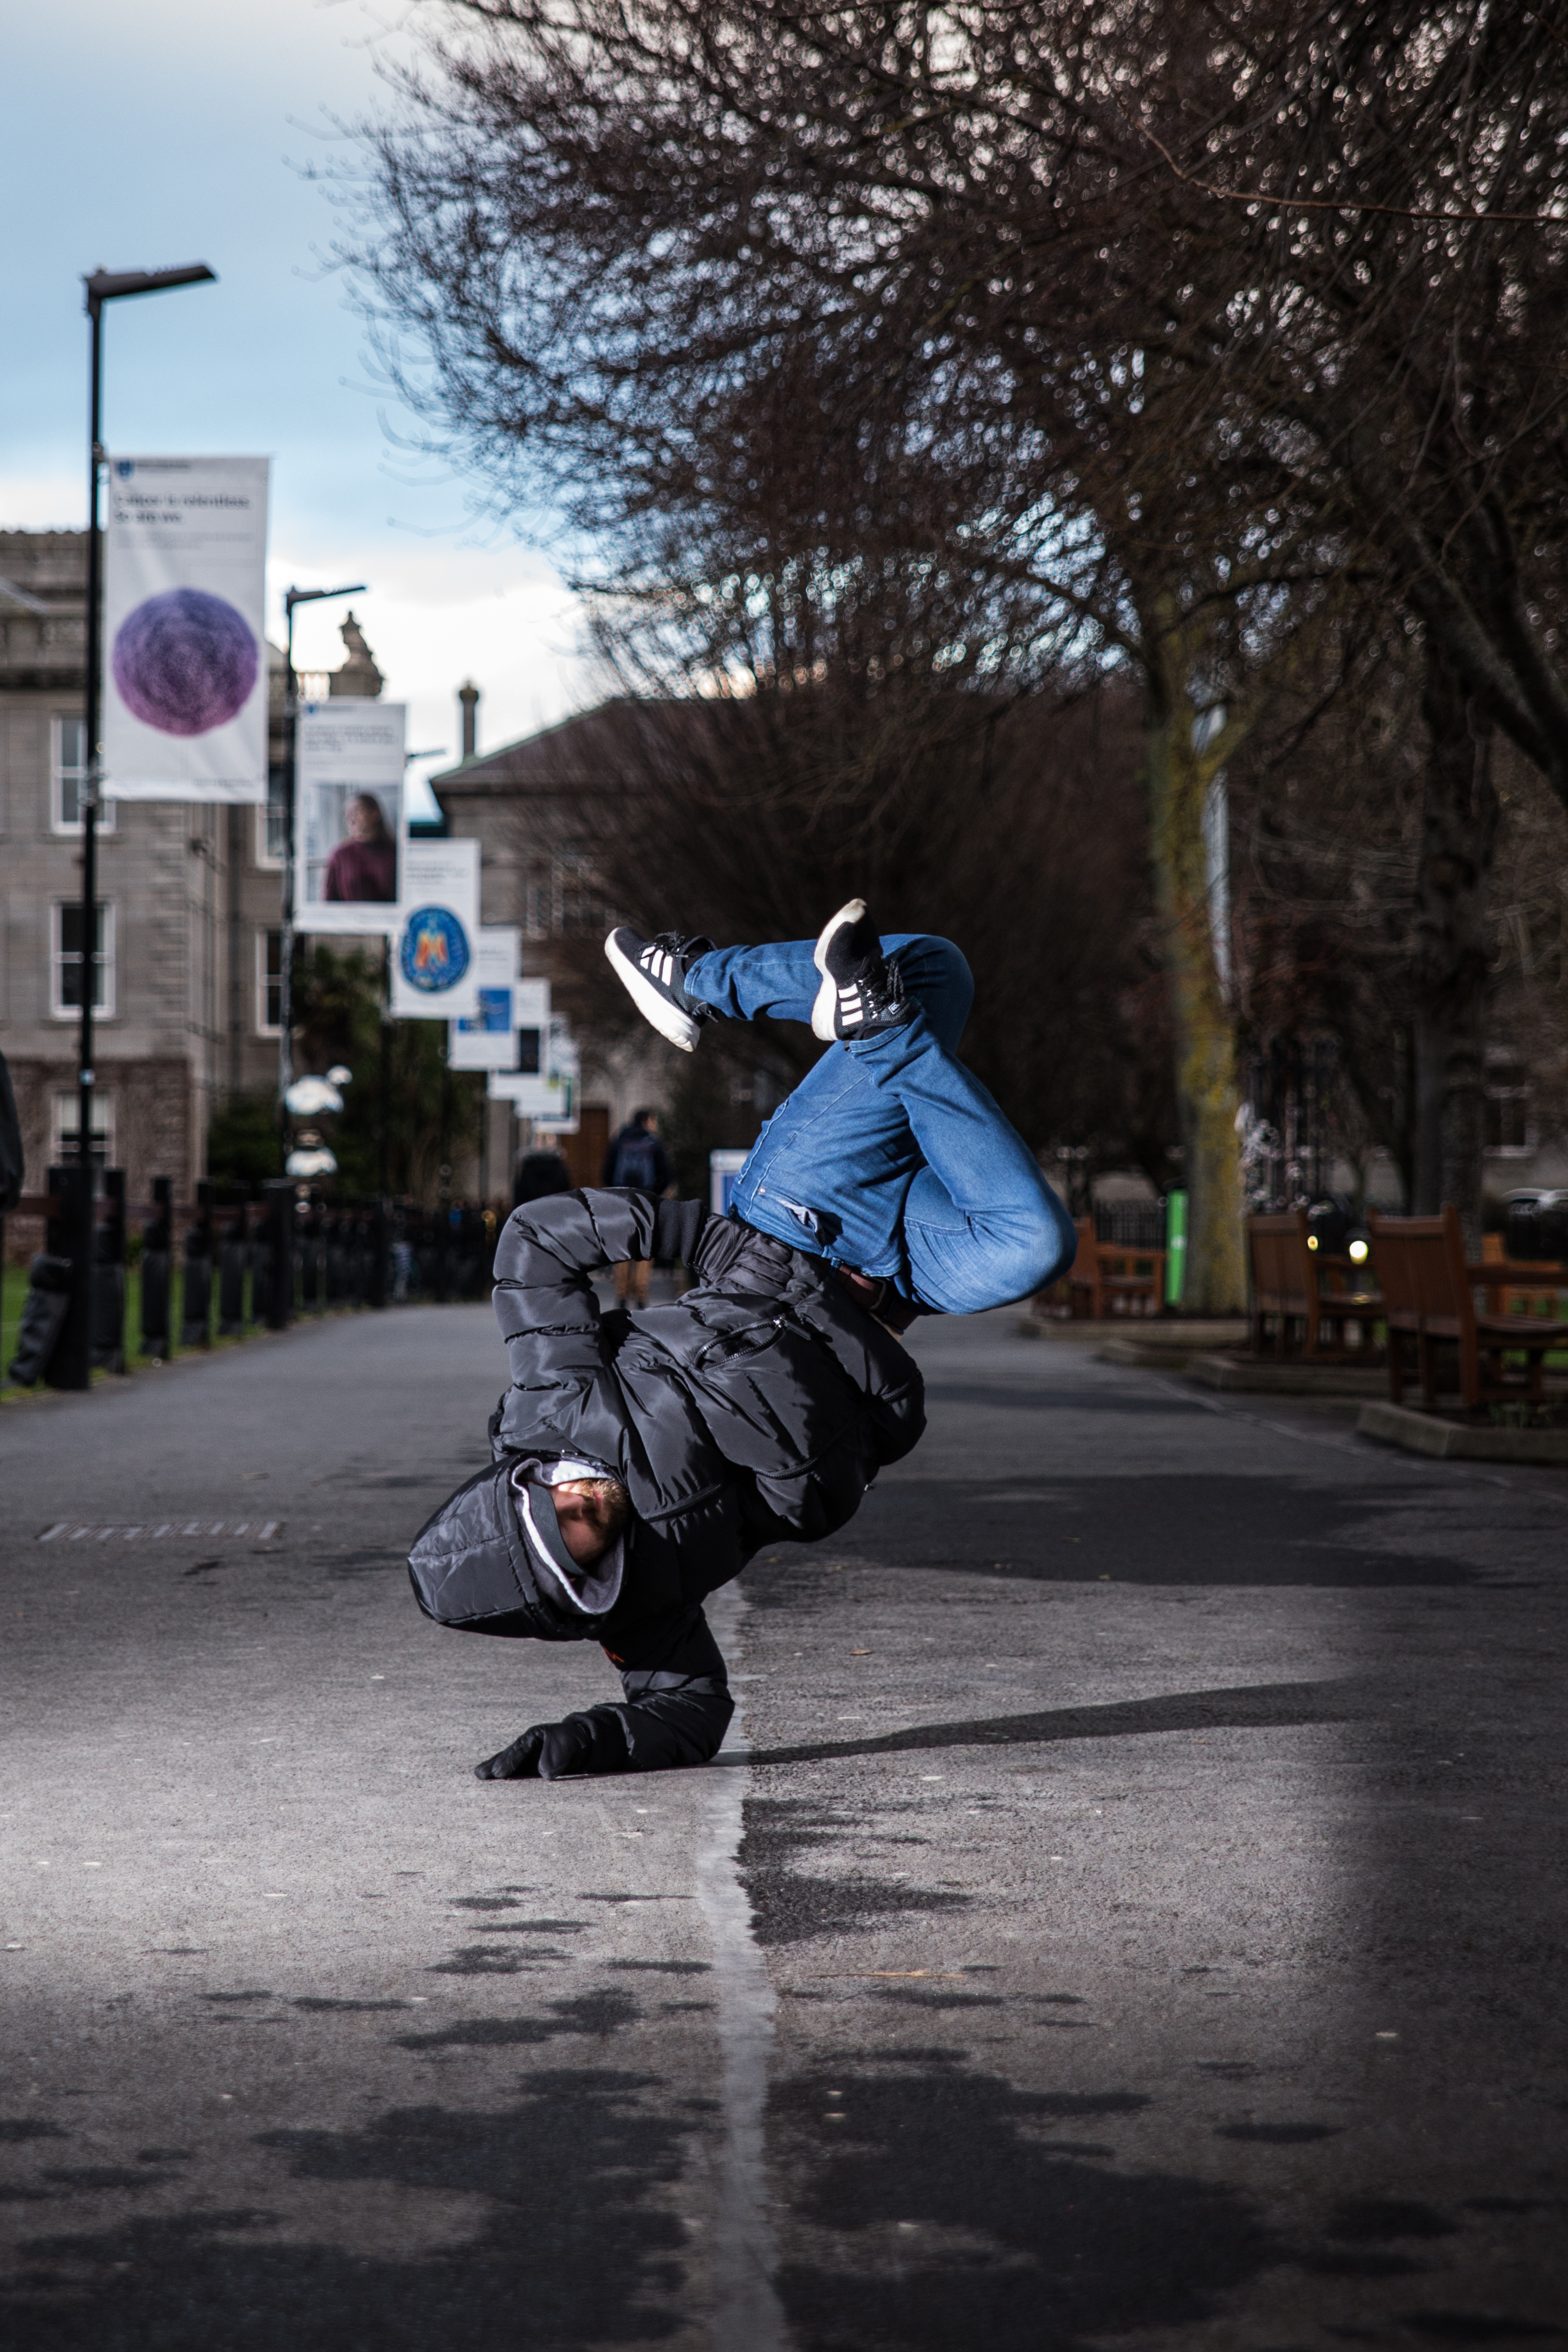 Chaz breakdancing in the street